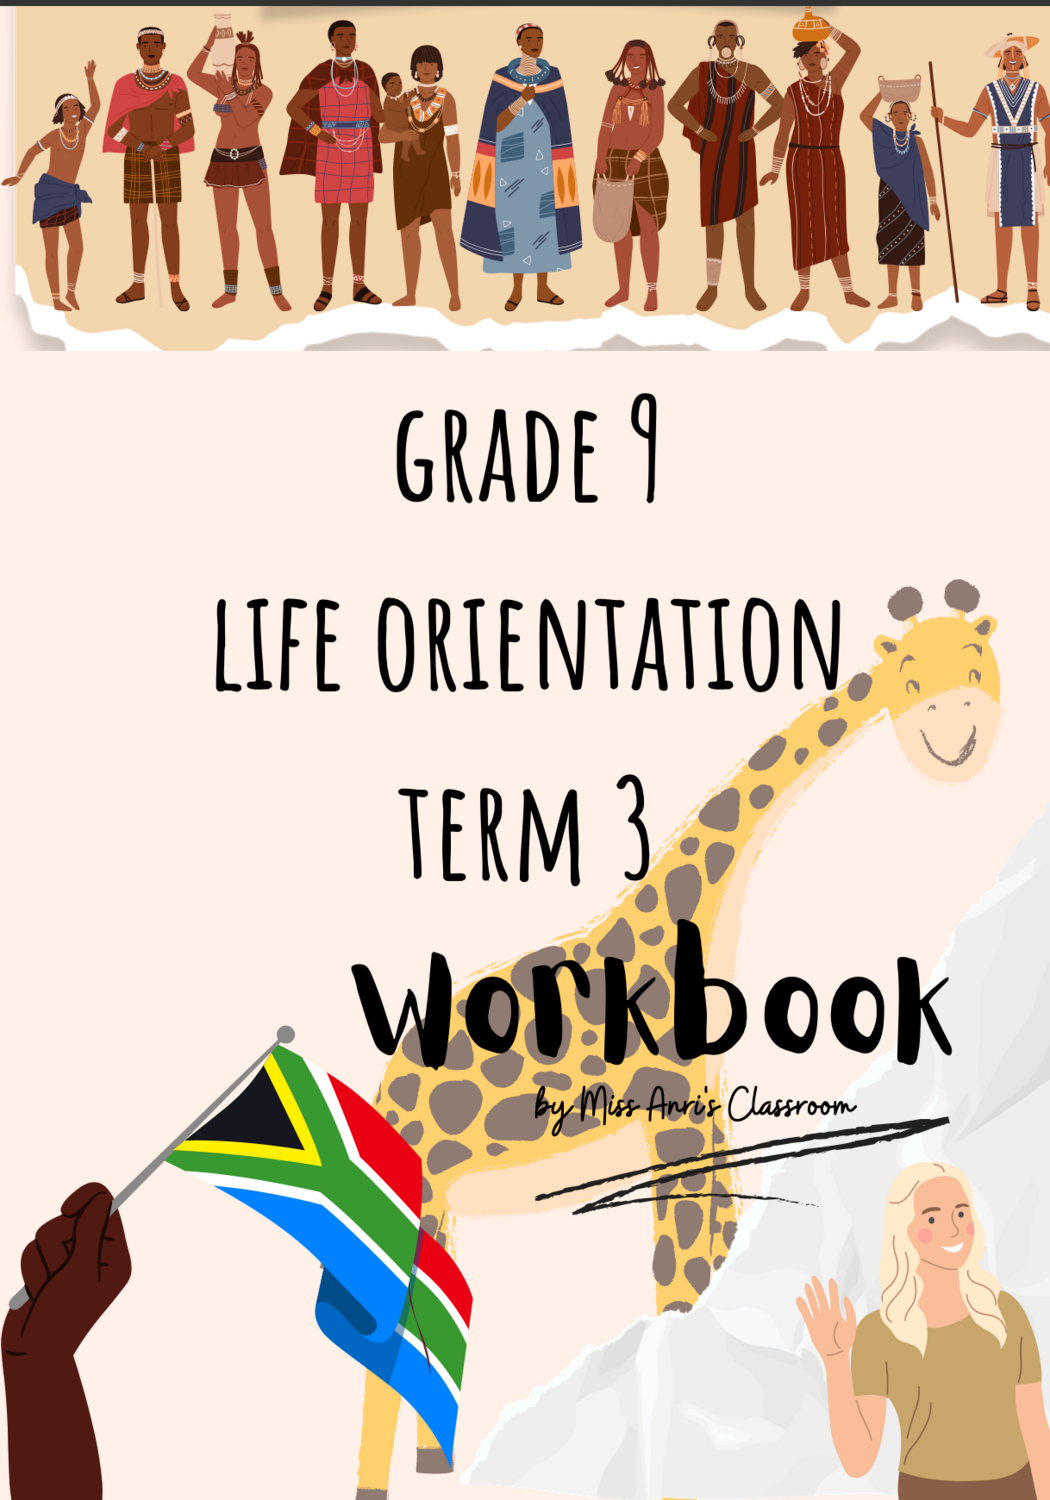 Grade 9 Life Orientation term 3 workbook